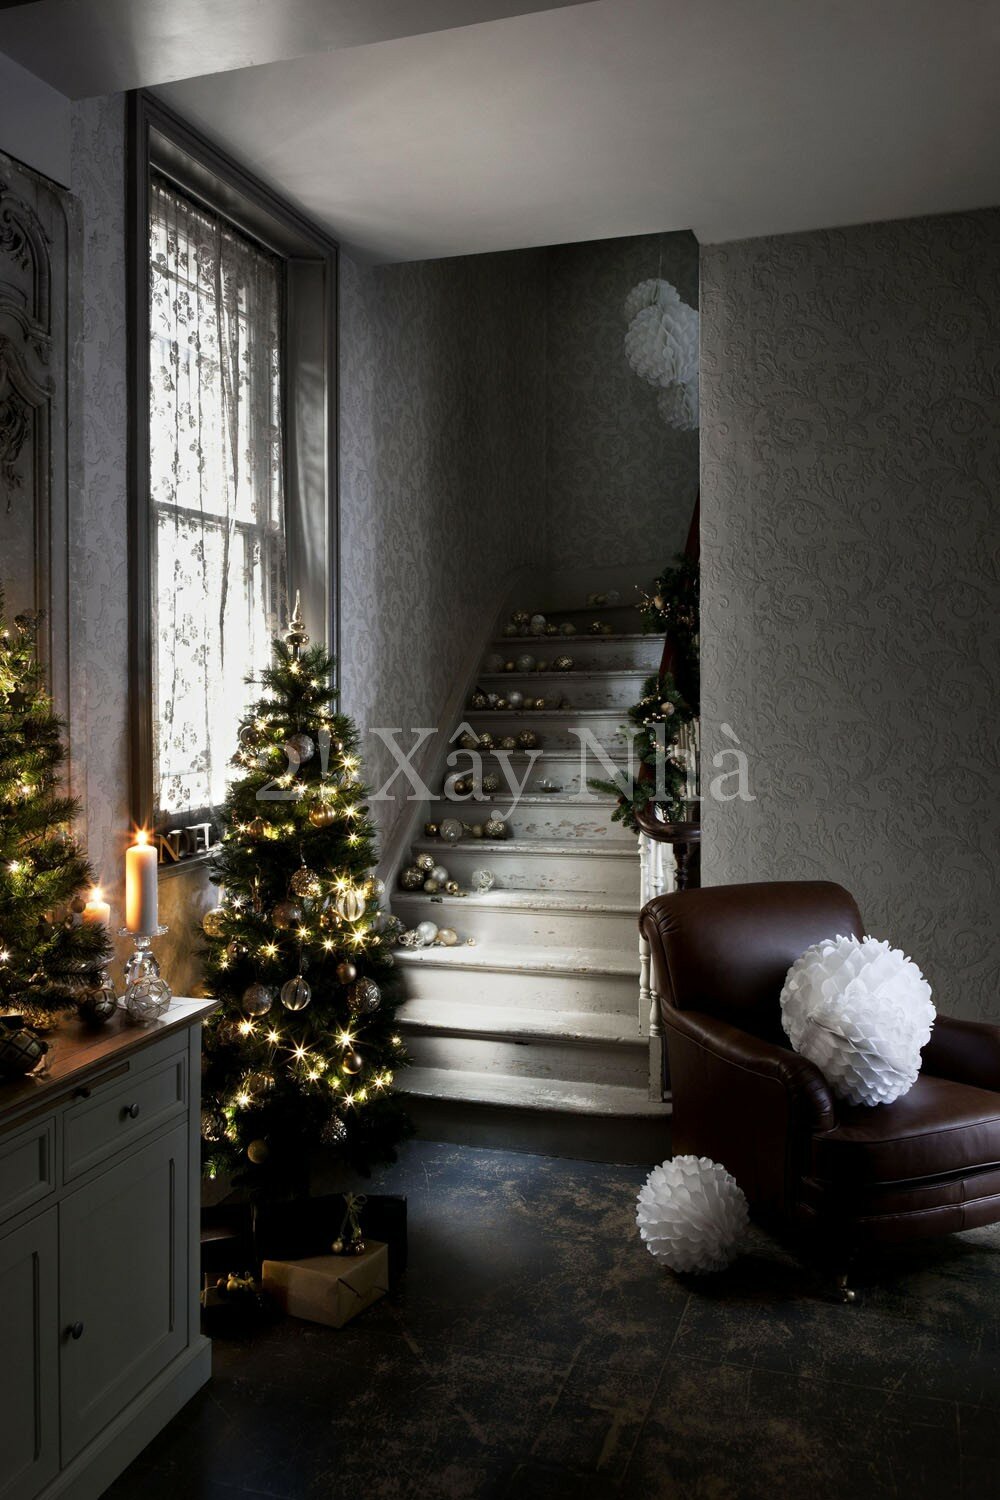 Modern Christmas Decorations for Inspiring Winter Holidays 27 30 Modern Christmas Decor Ideas For Delightful Winter Holidays